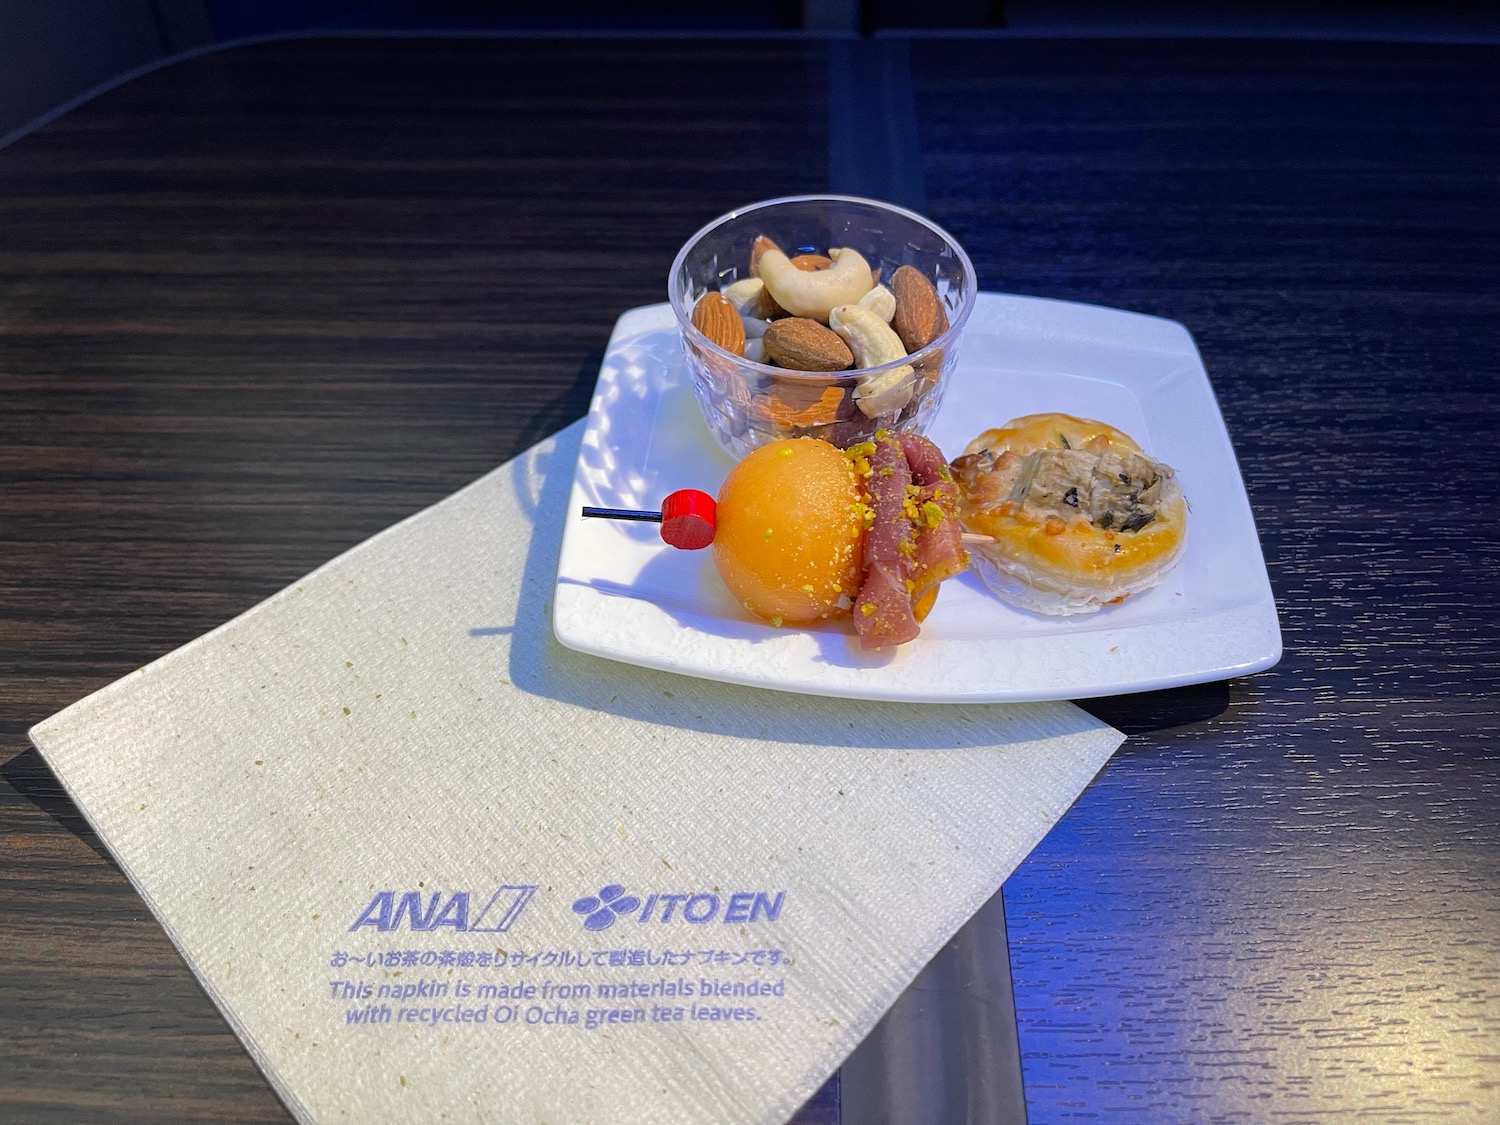 a plate of food on a napkin